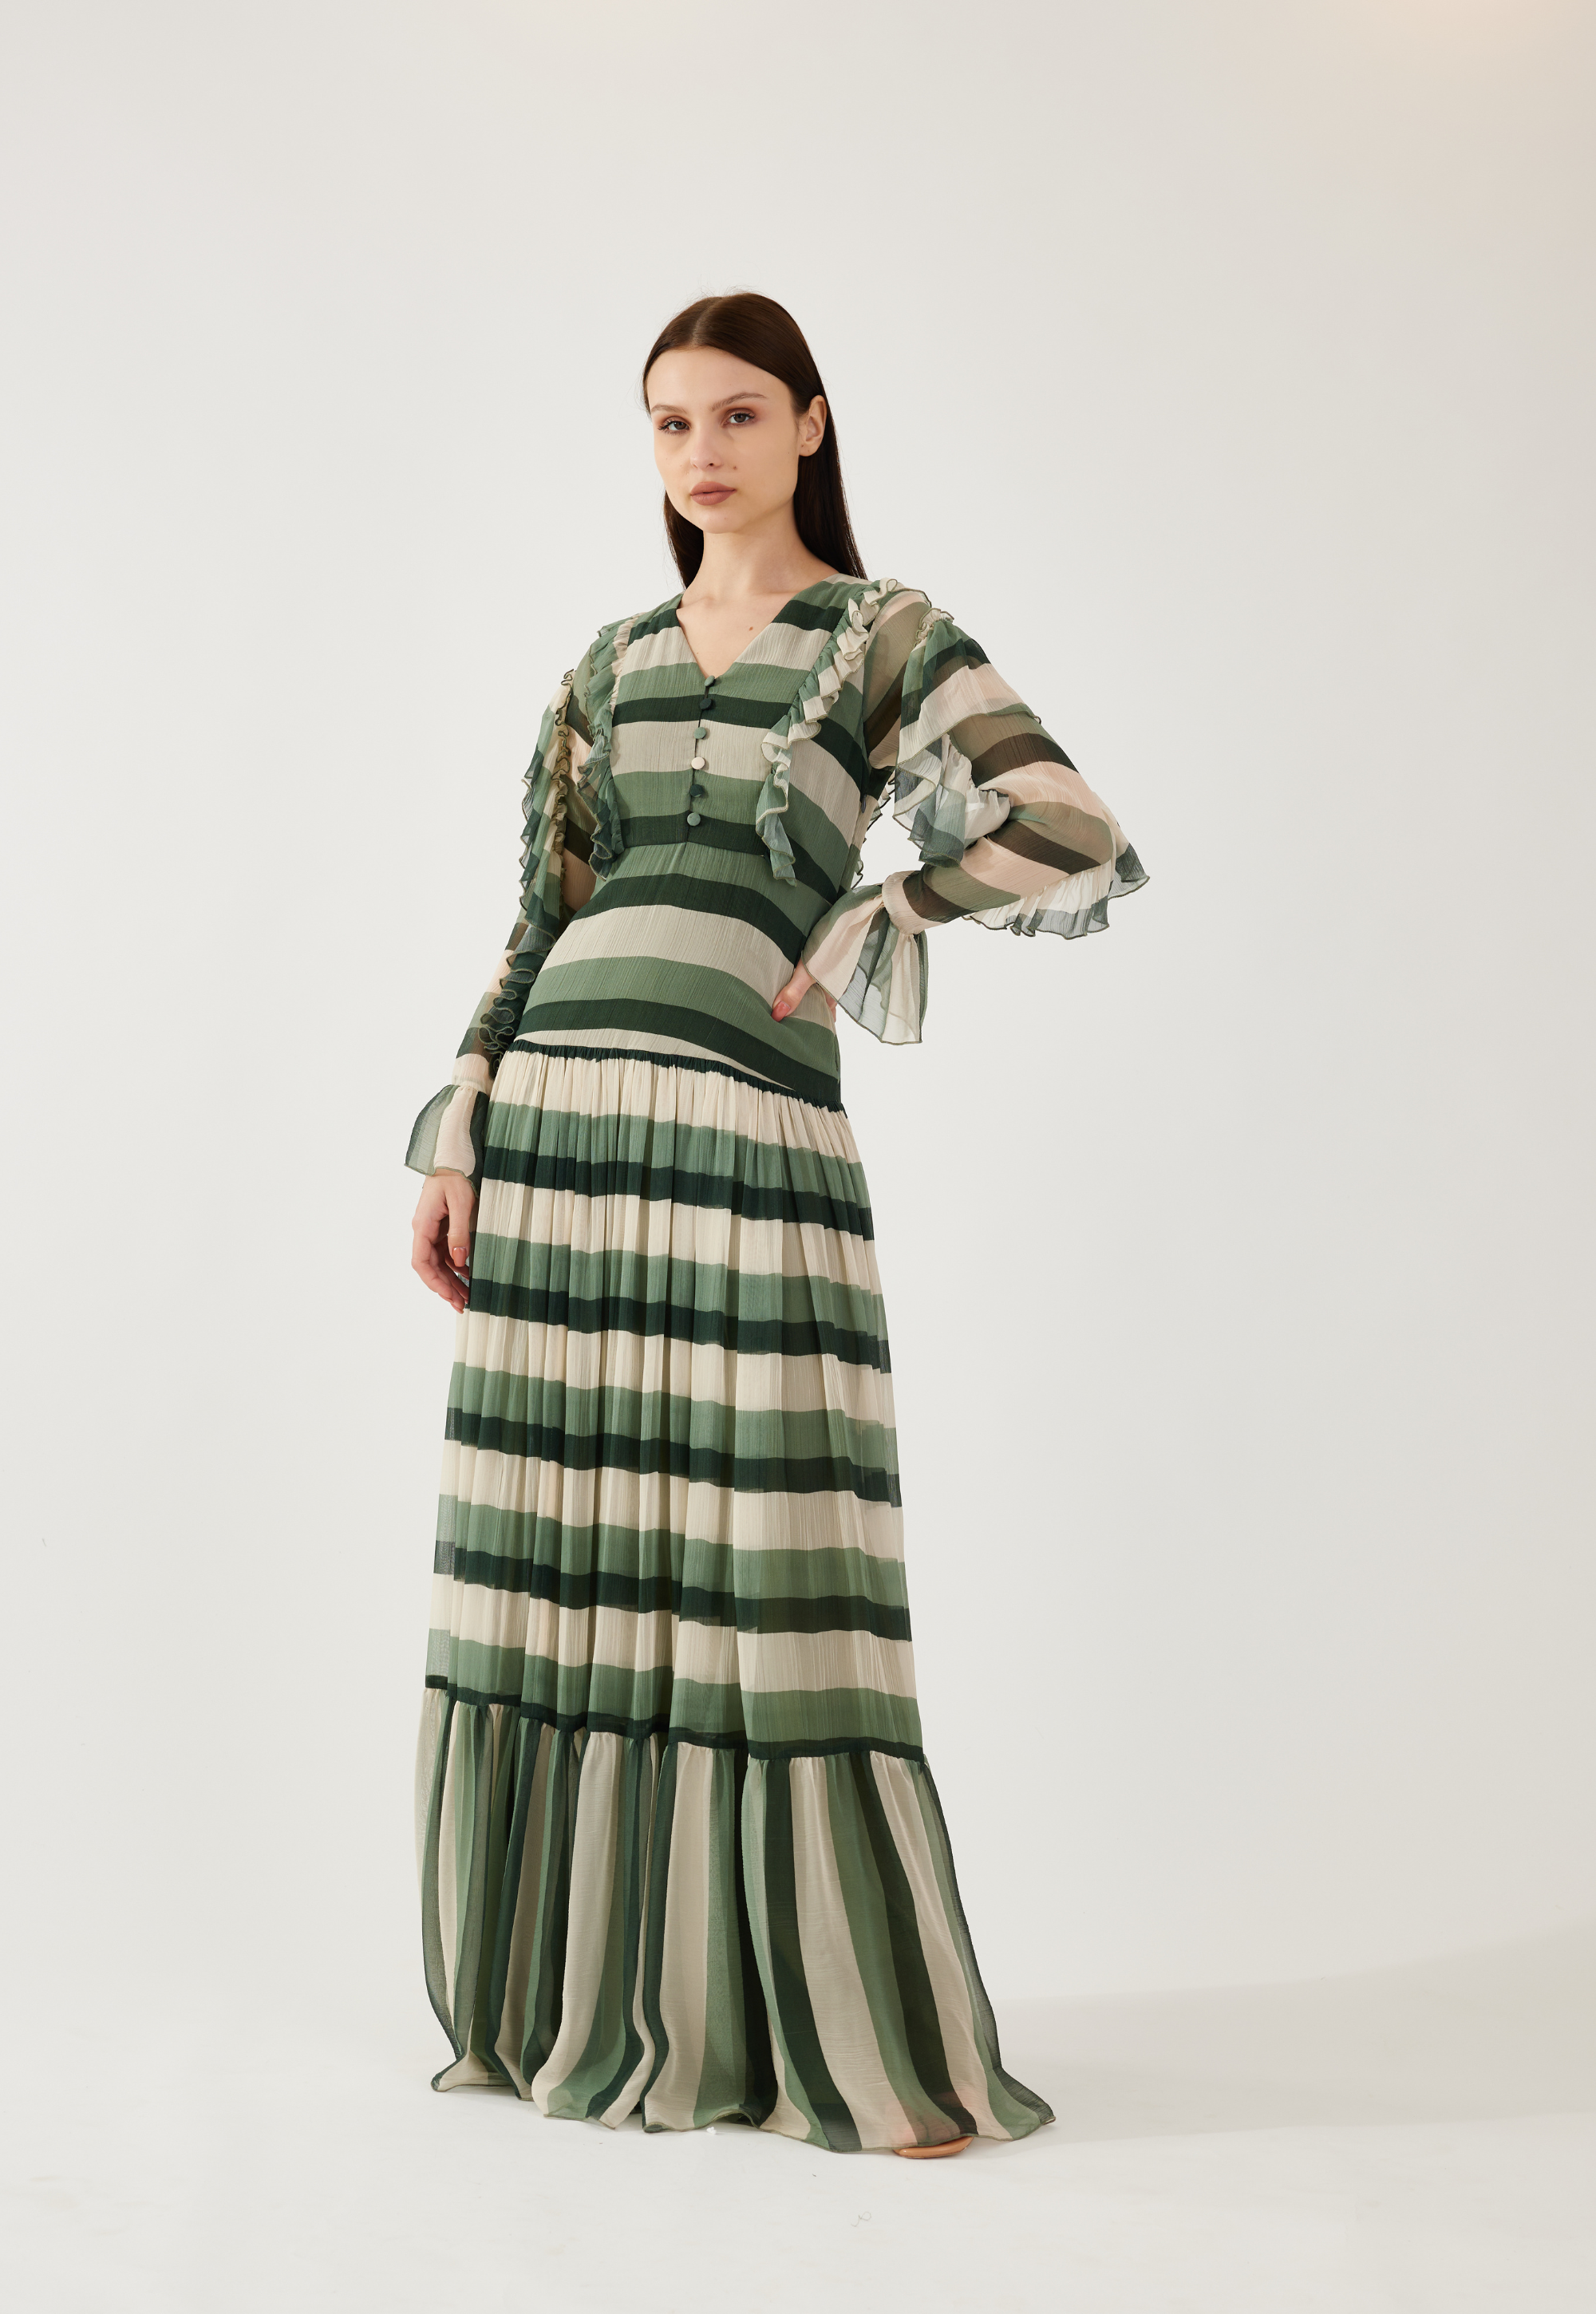 Beige, olive and green stripe long dress